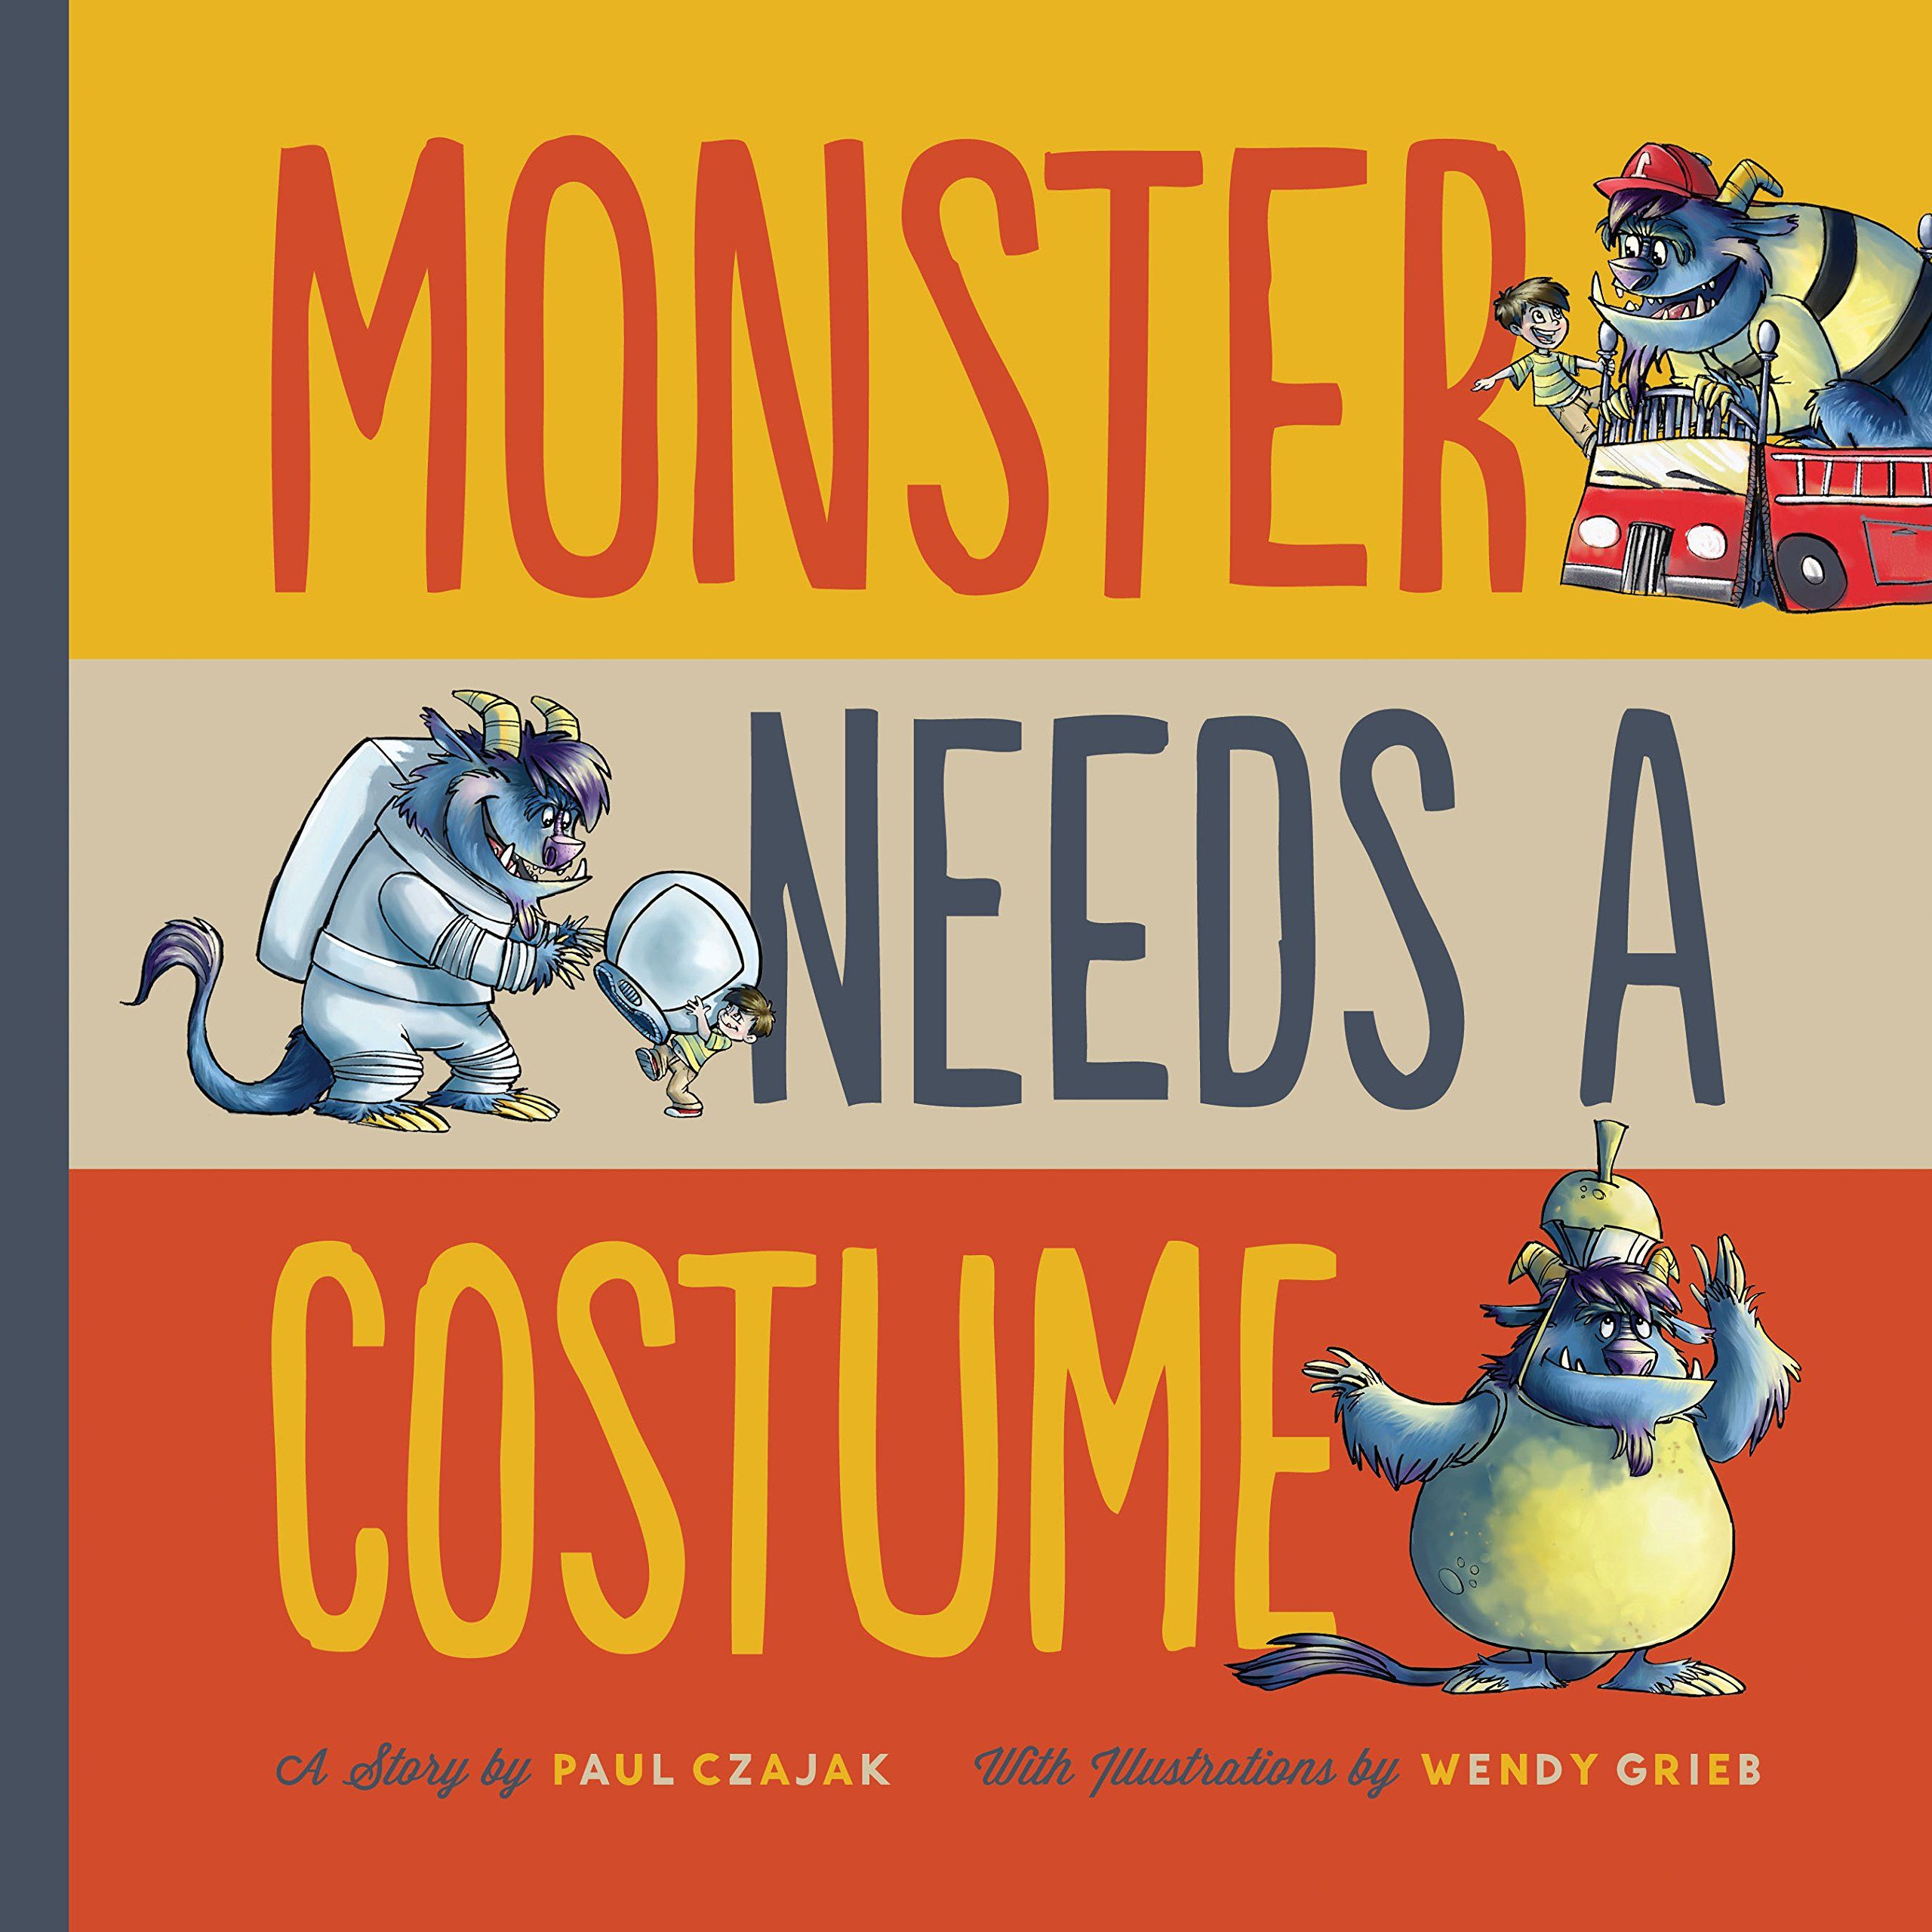 Monster Needs a Costume